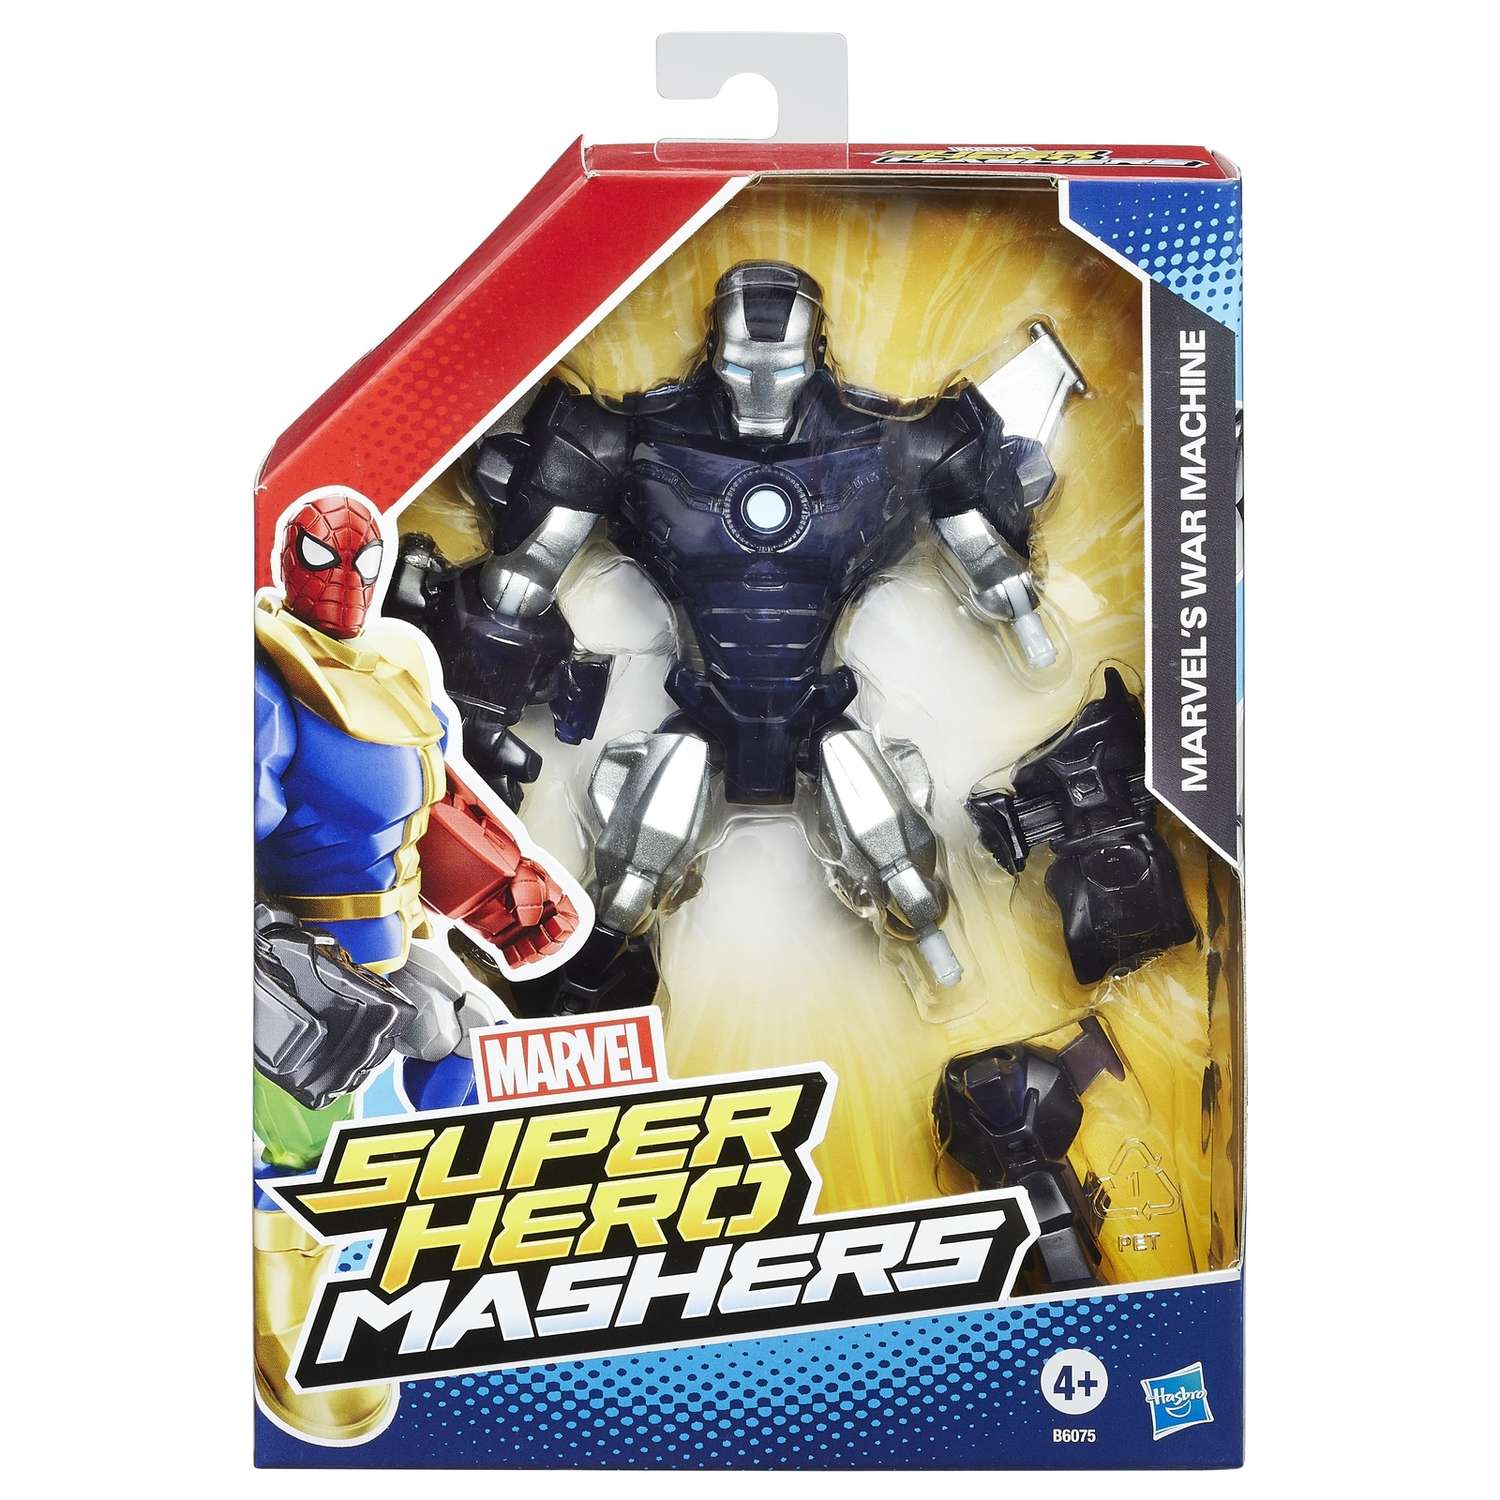 Разборные фигурки HEROMASHERS Super Hero Mashers в ассортименте - фото 68